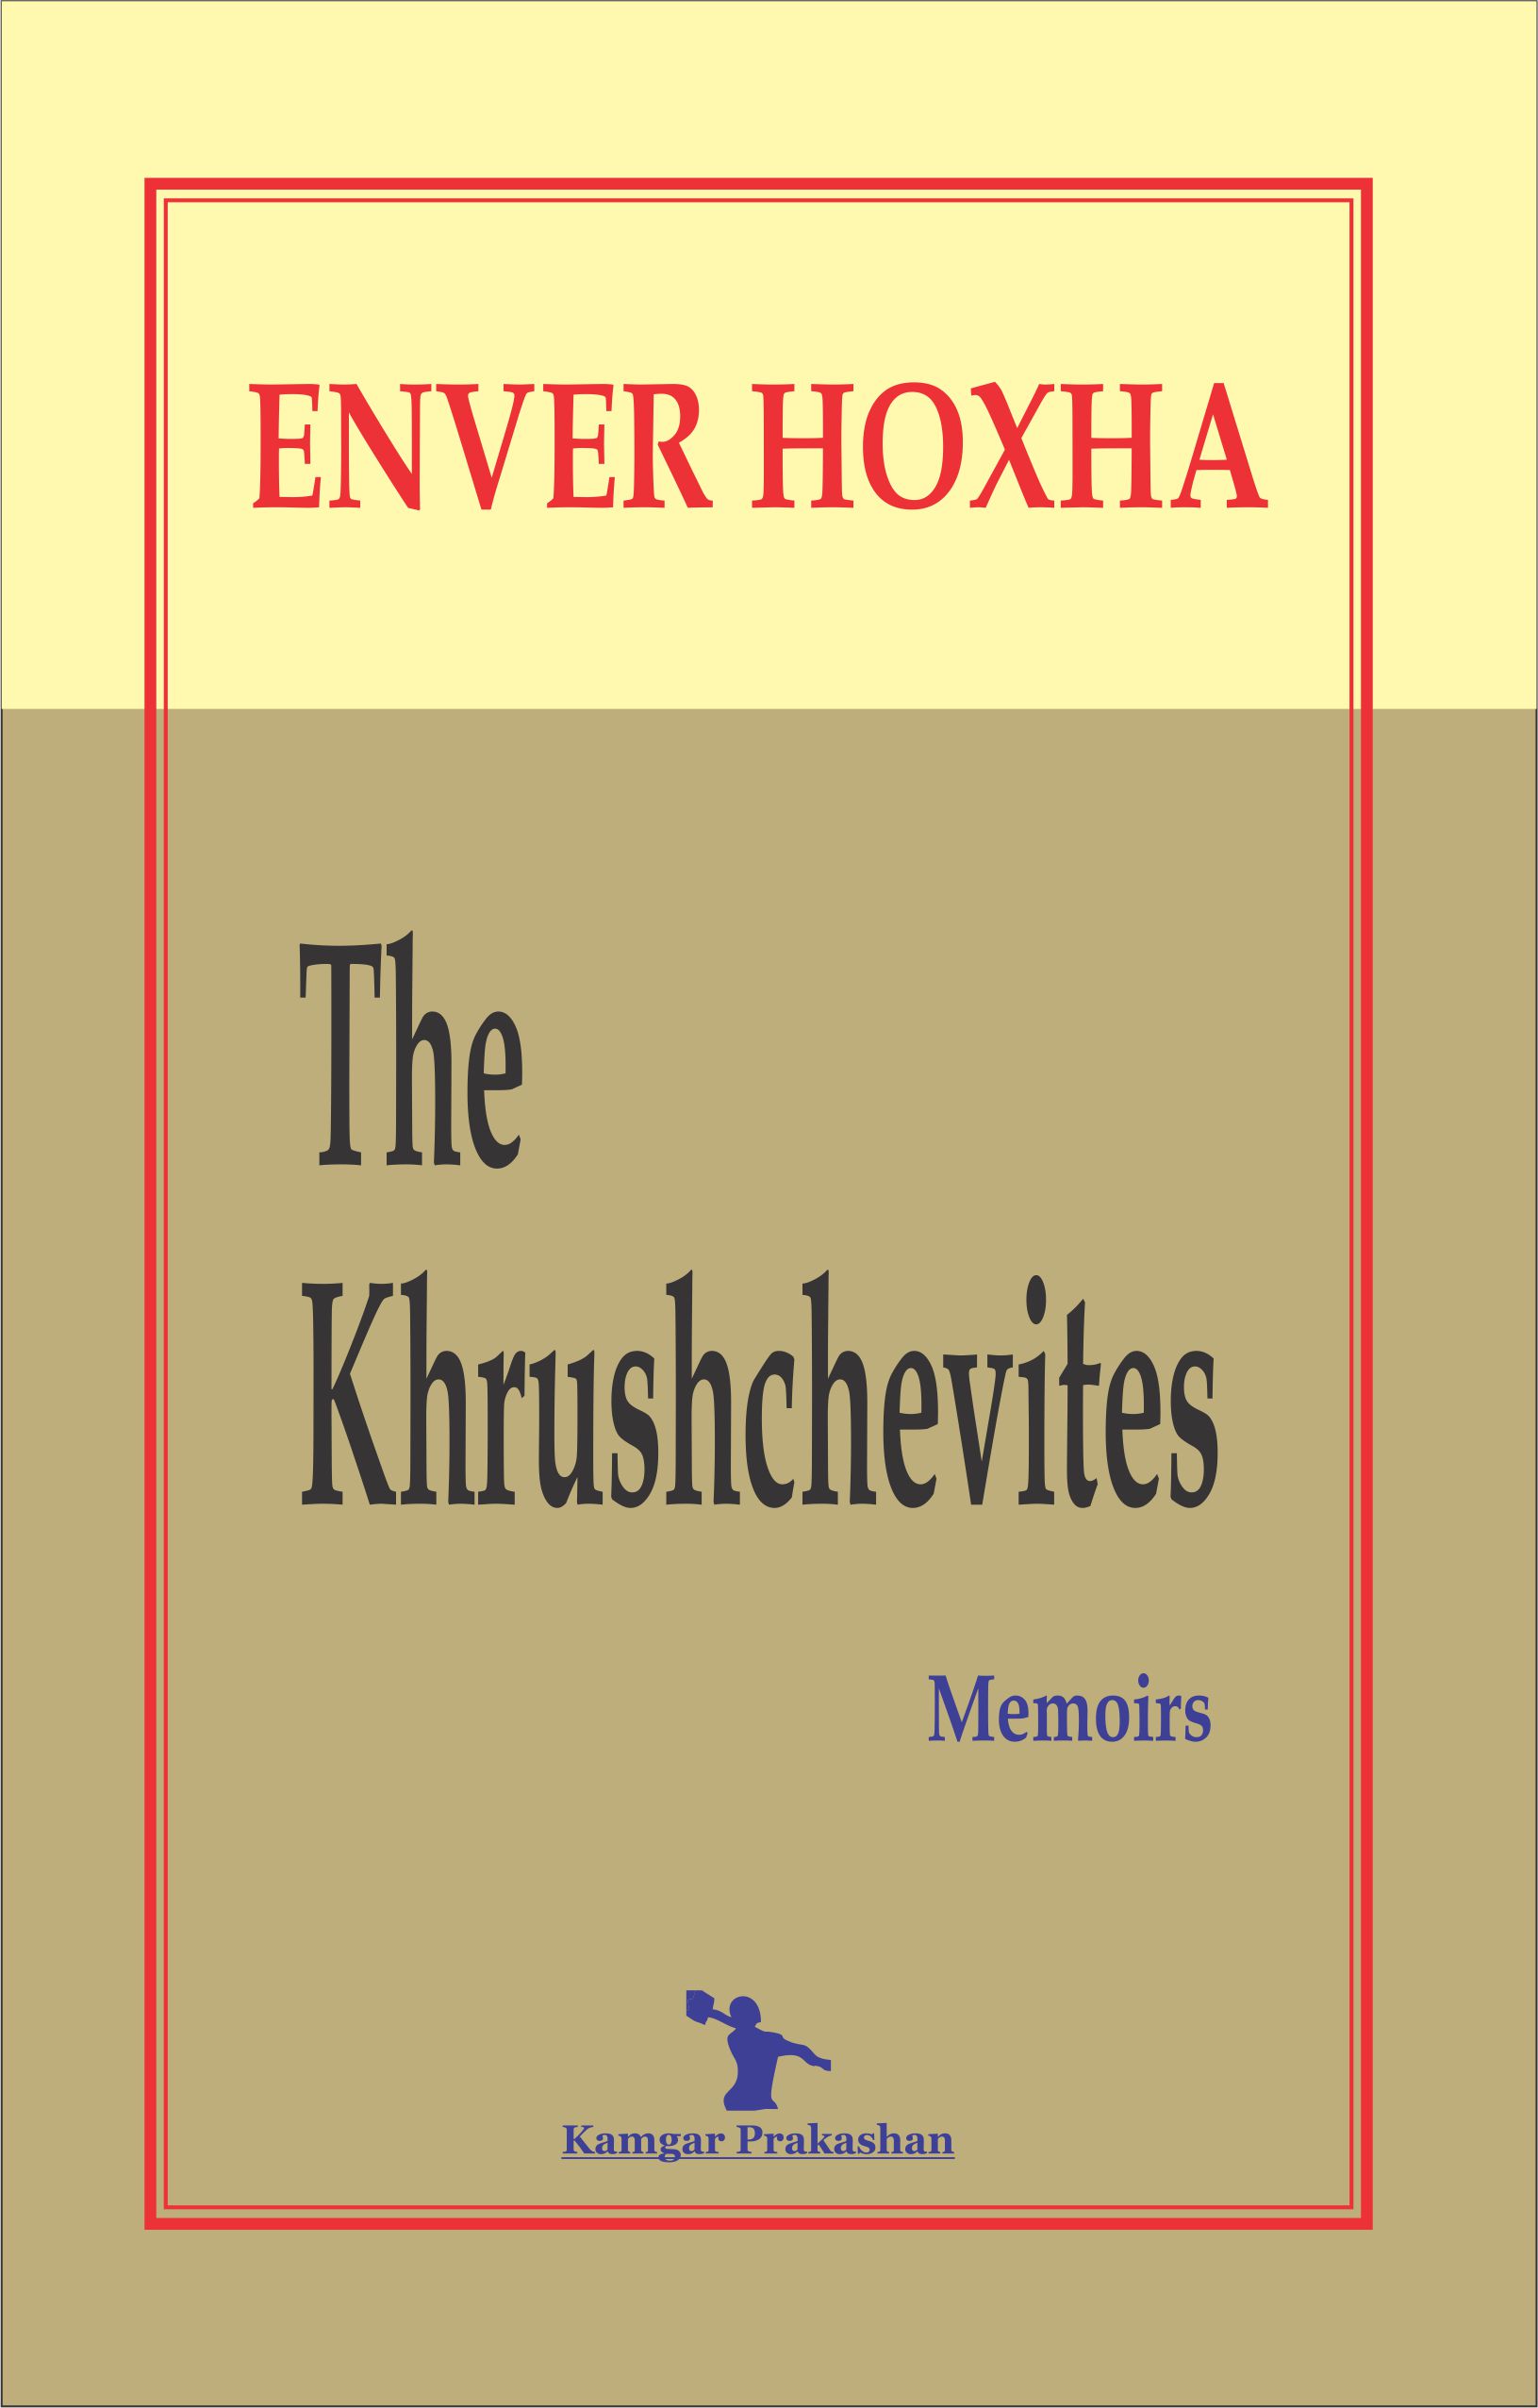 THE KHRUSHCHEVITES